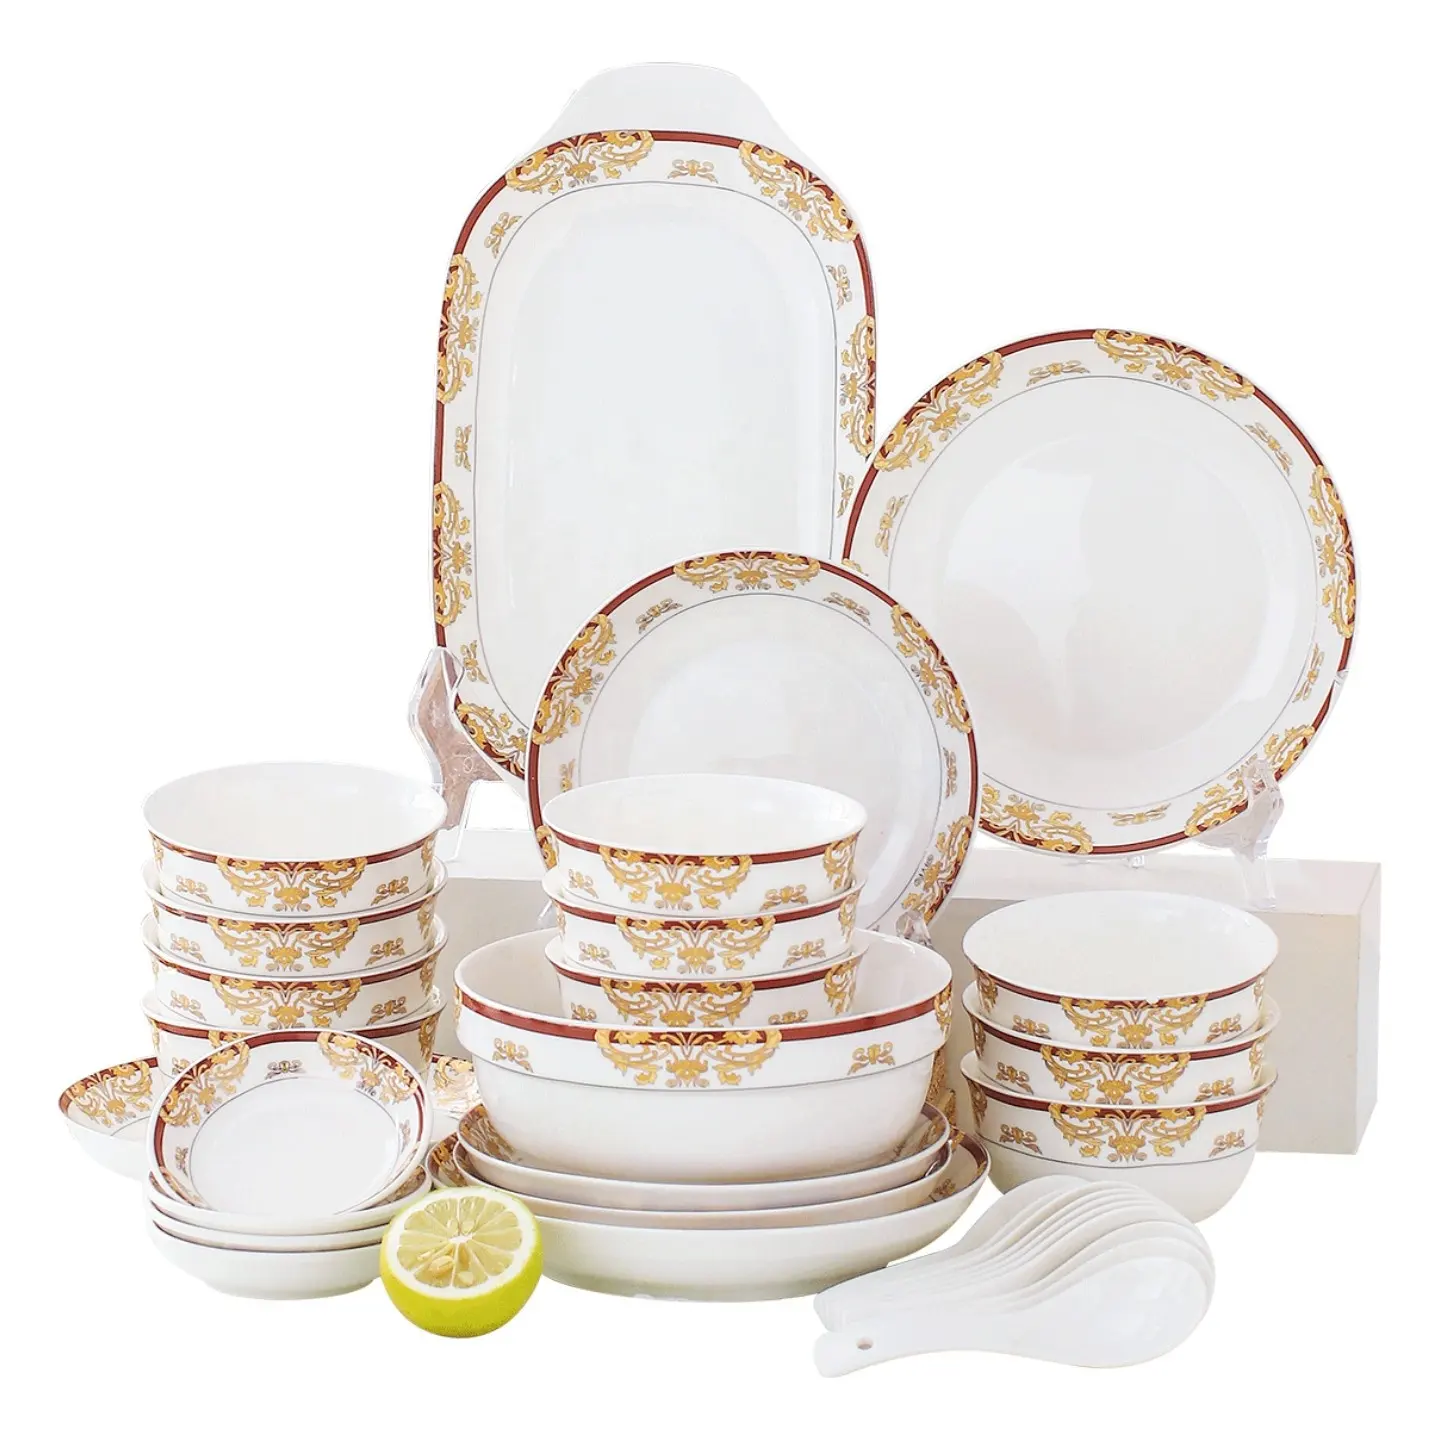 JY Gift plate set dinnerware porcelain ceramic crockery 32 PCS dinner set plates and bowls fine bone dining dishes set